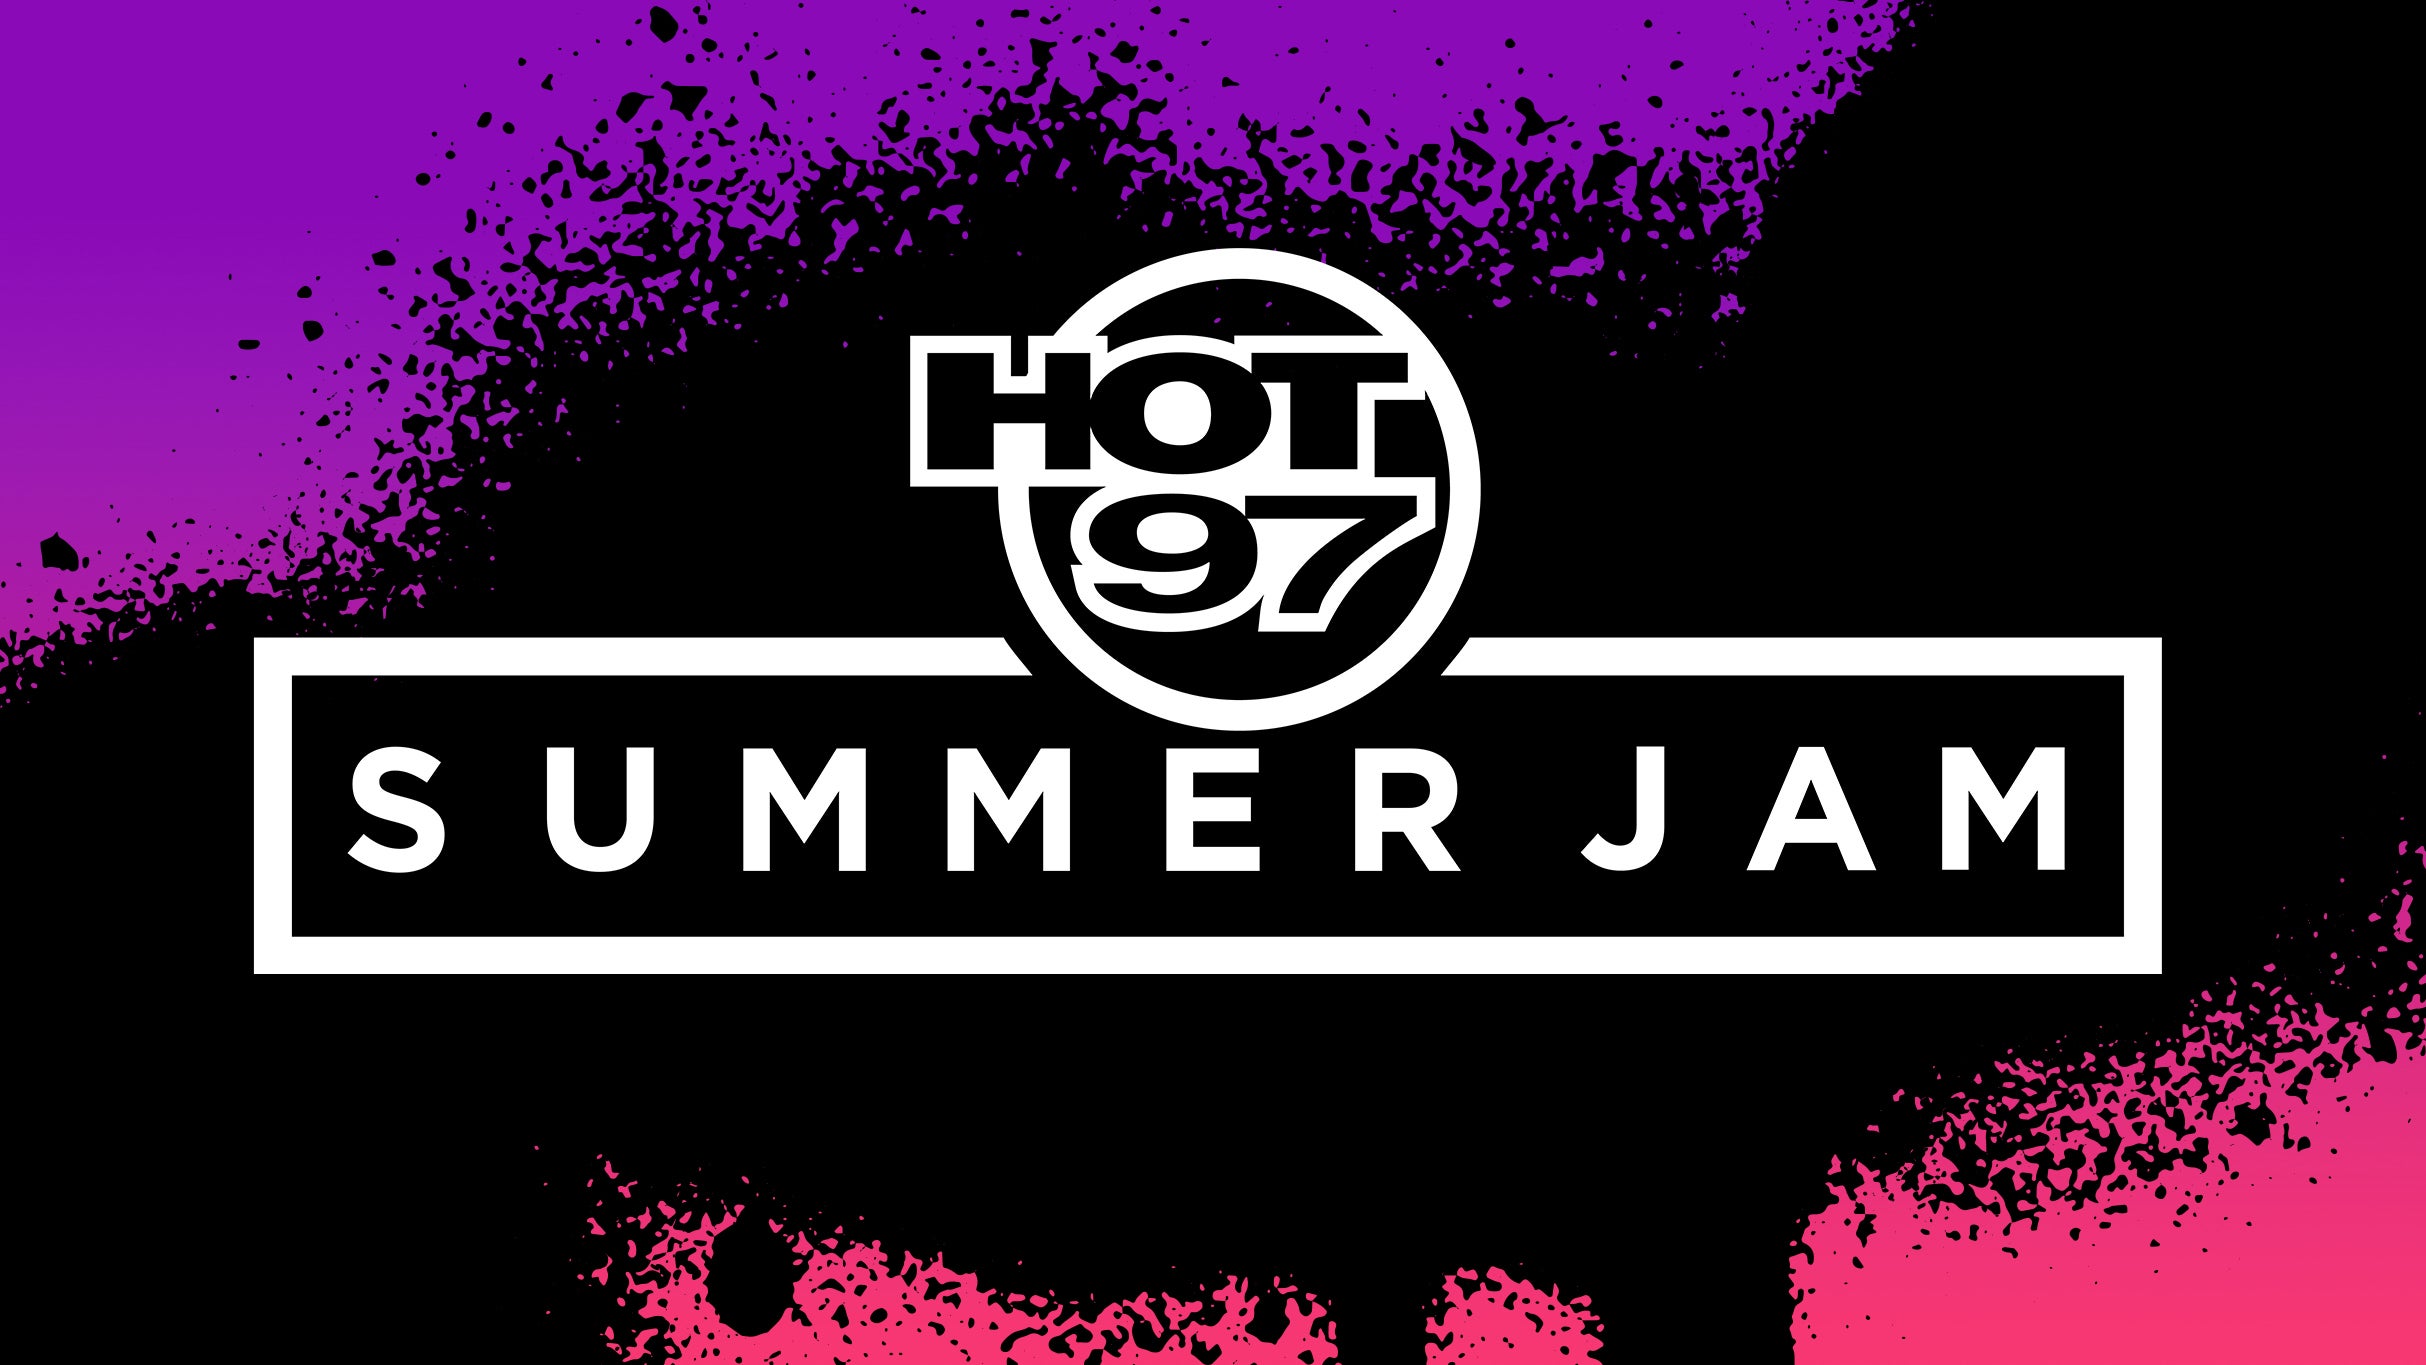 HOT 97 Summer Jam in Belmont Park - Long Island promo photo for Venue presale offer code